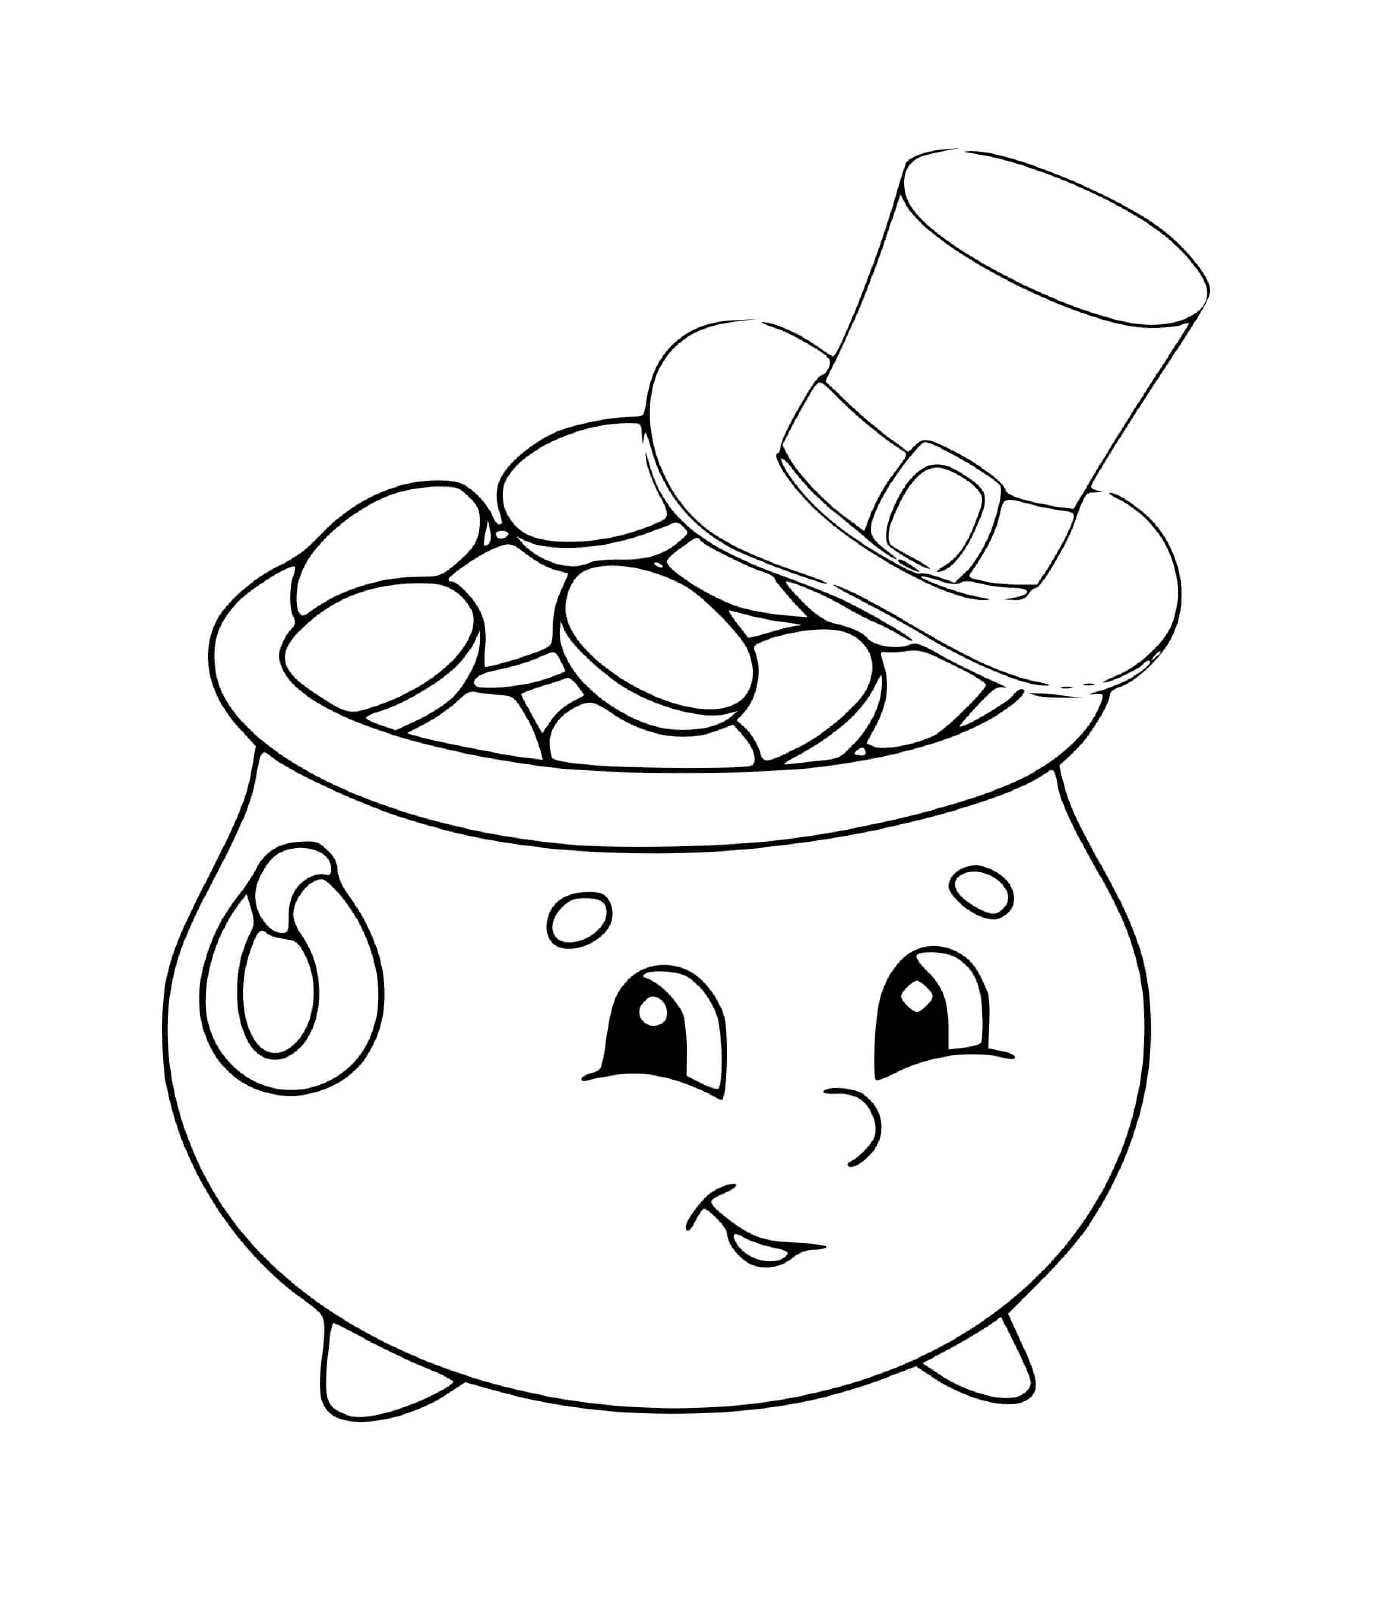 coloriage pot or au chapeau dessin anime